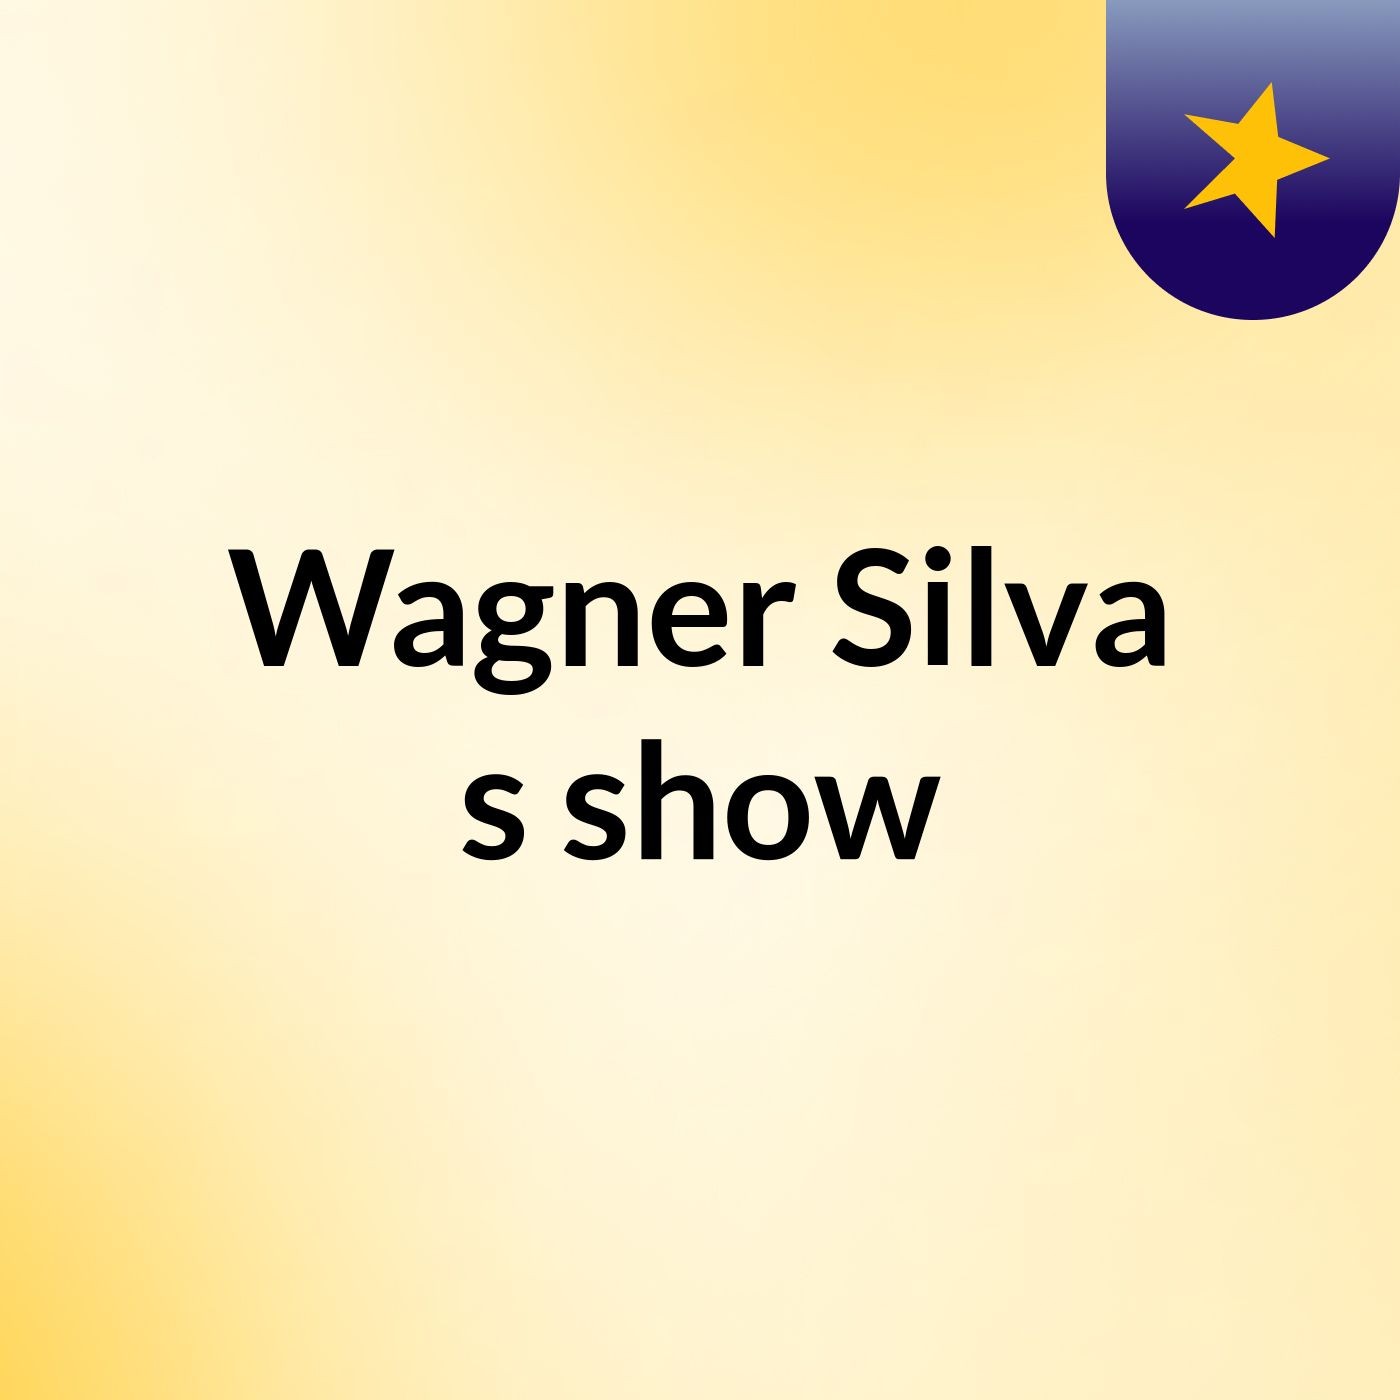 Wagner Silva's show